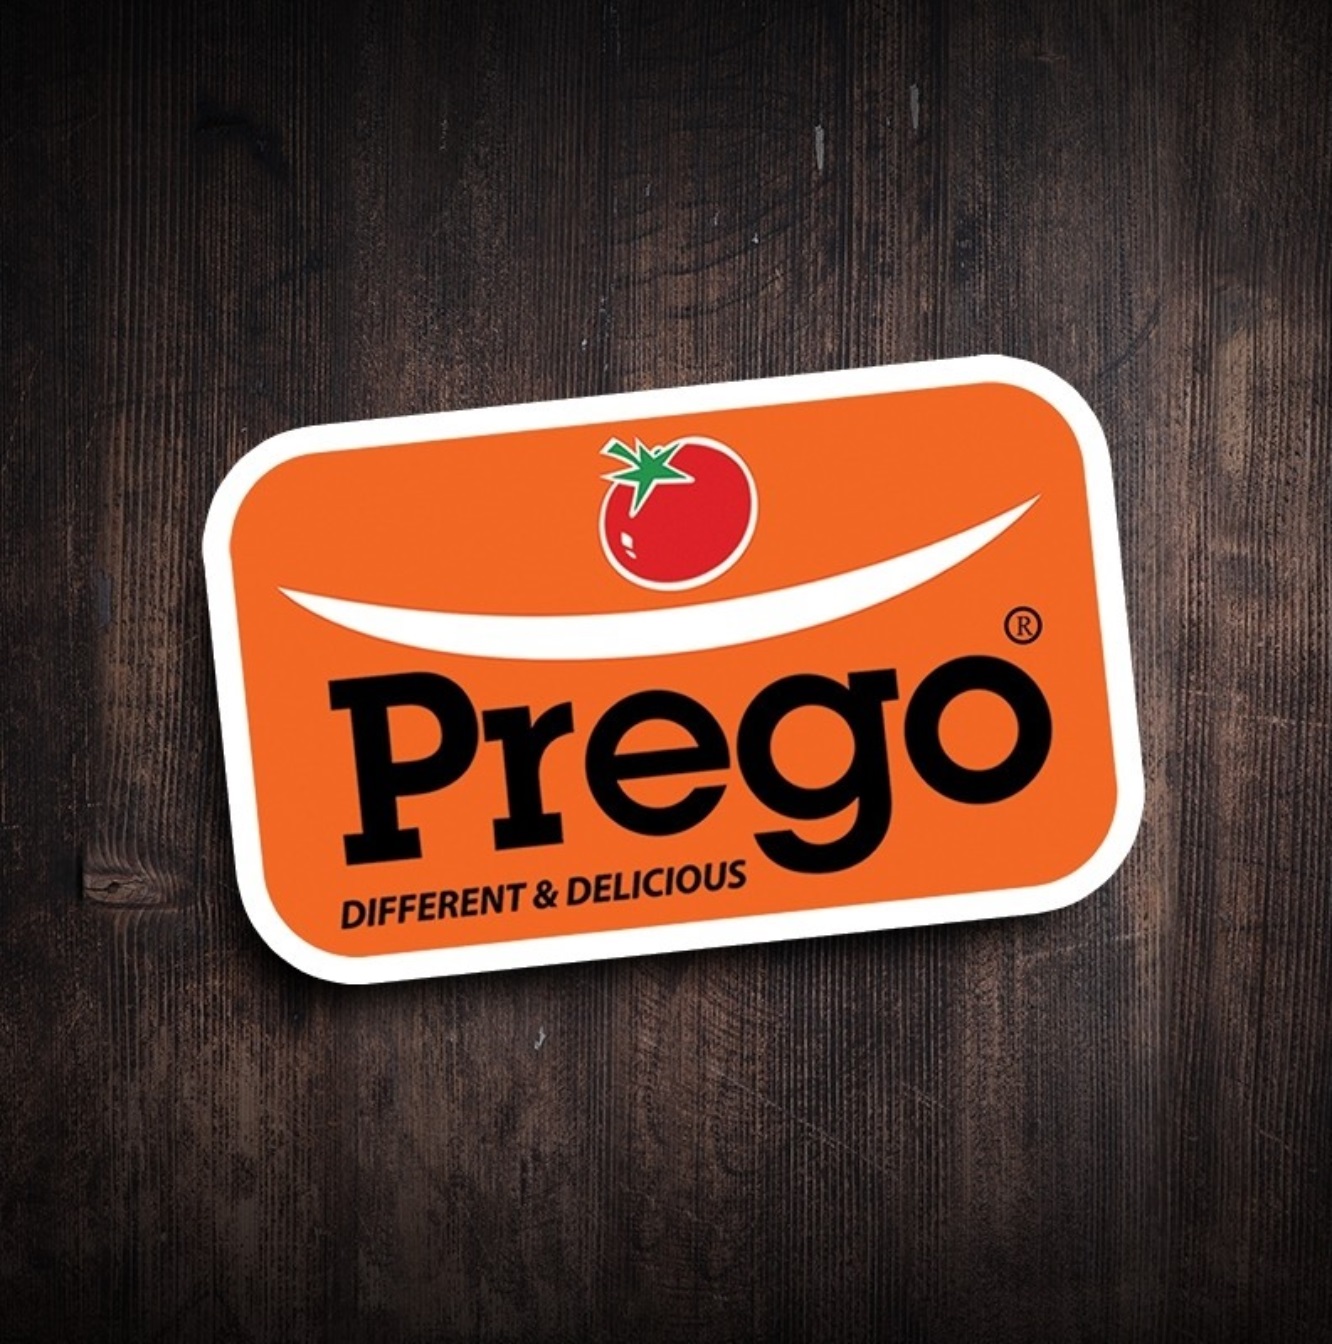 Prego foods